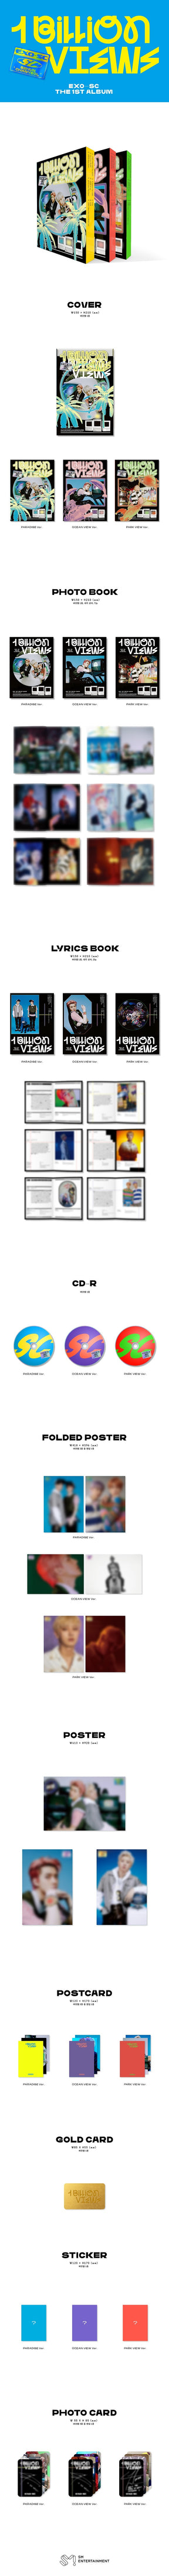 EXO-SC Vol. 1 - 1 Billion Views (Random Version)